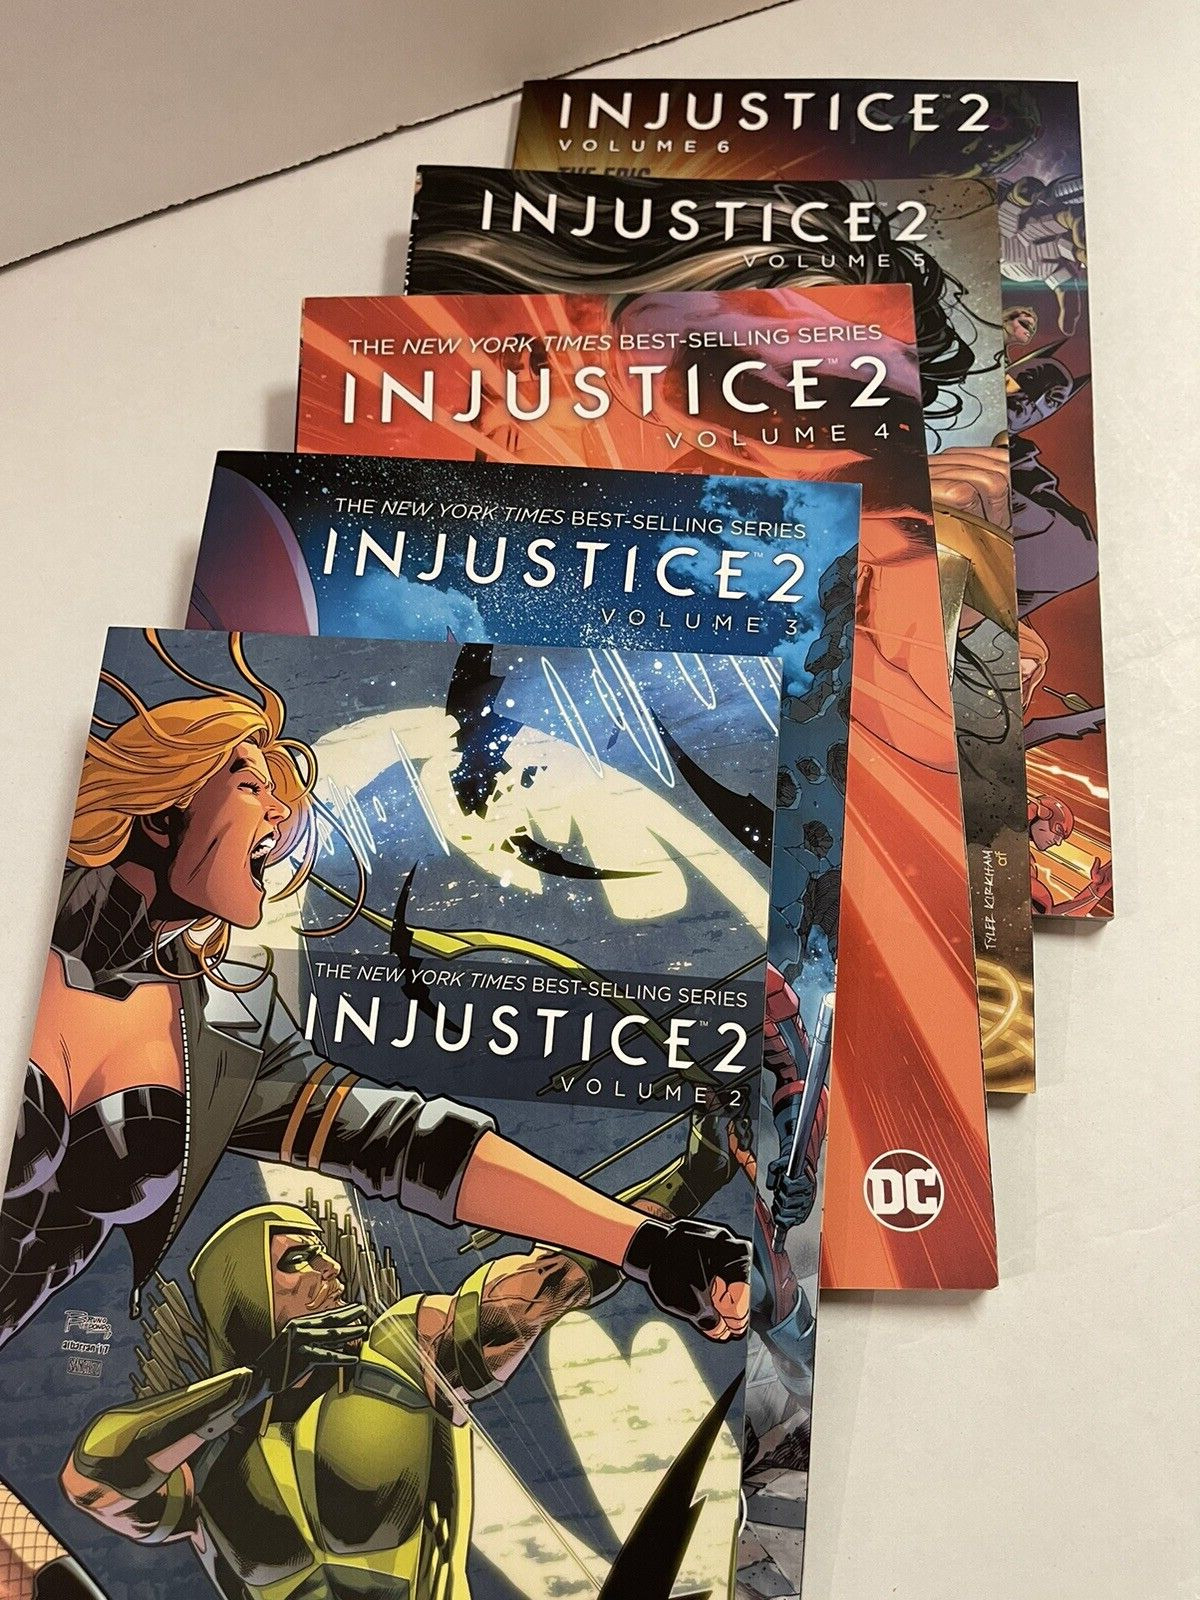 Injustice 2 Trade Paperback Lot of 5 Volumes- 2-6 (2, 3, 4, 5, 6)